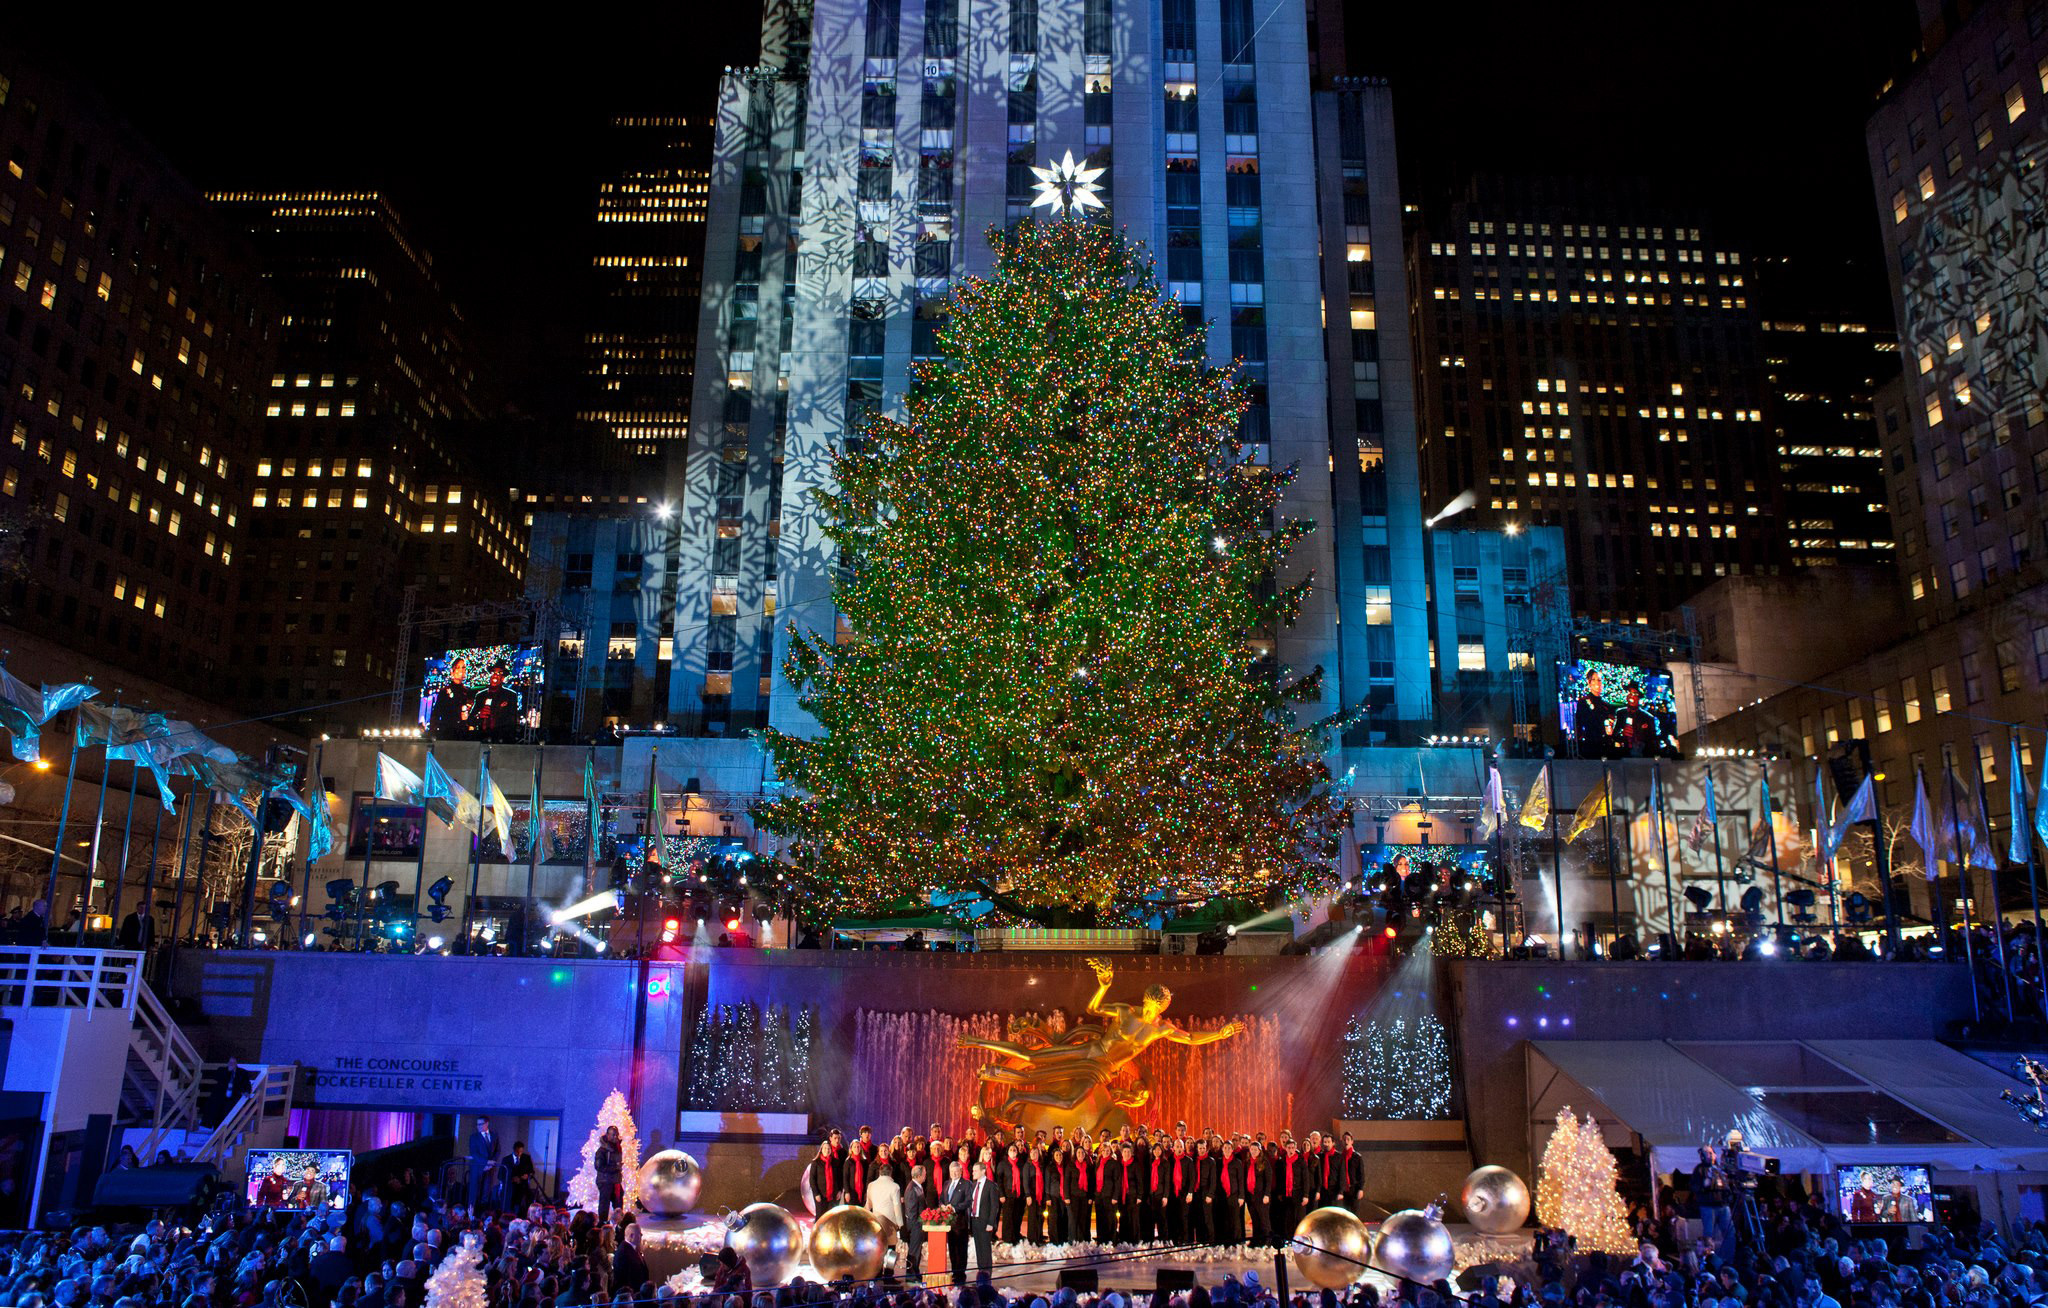 Rockefeller Christmas Tree Lighting
 When is the 2014 Rockefeller Center Christmas Tree